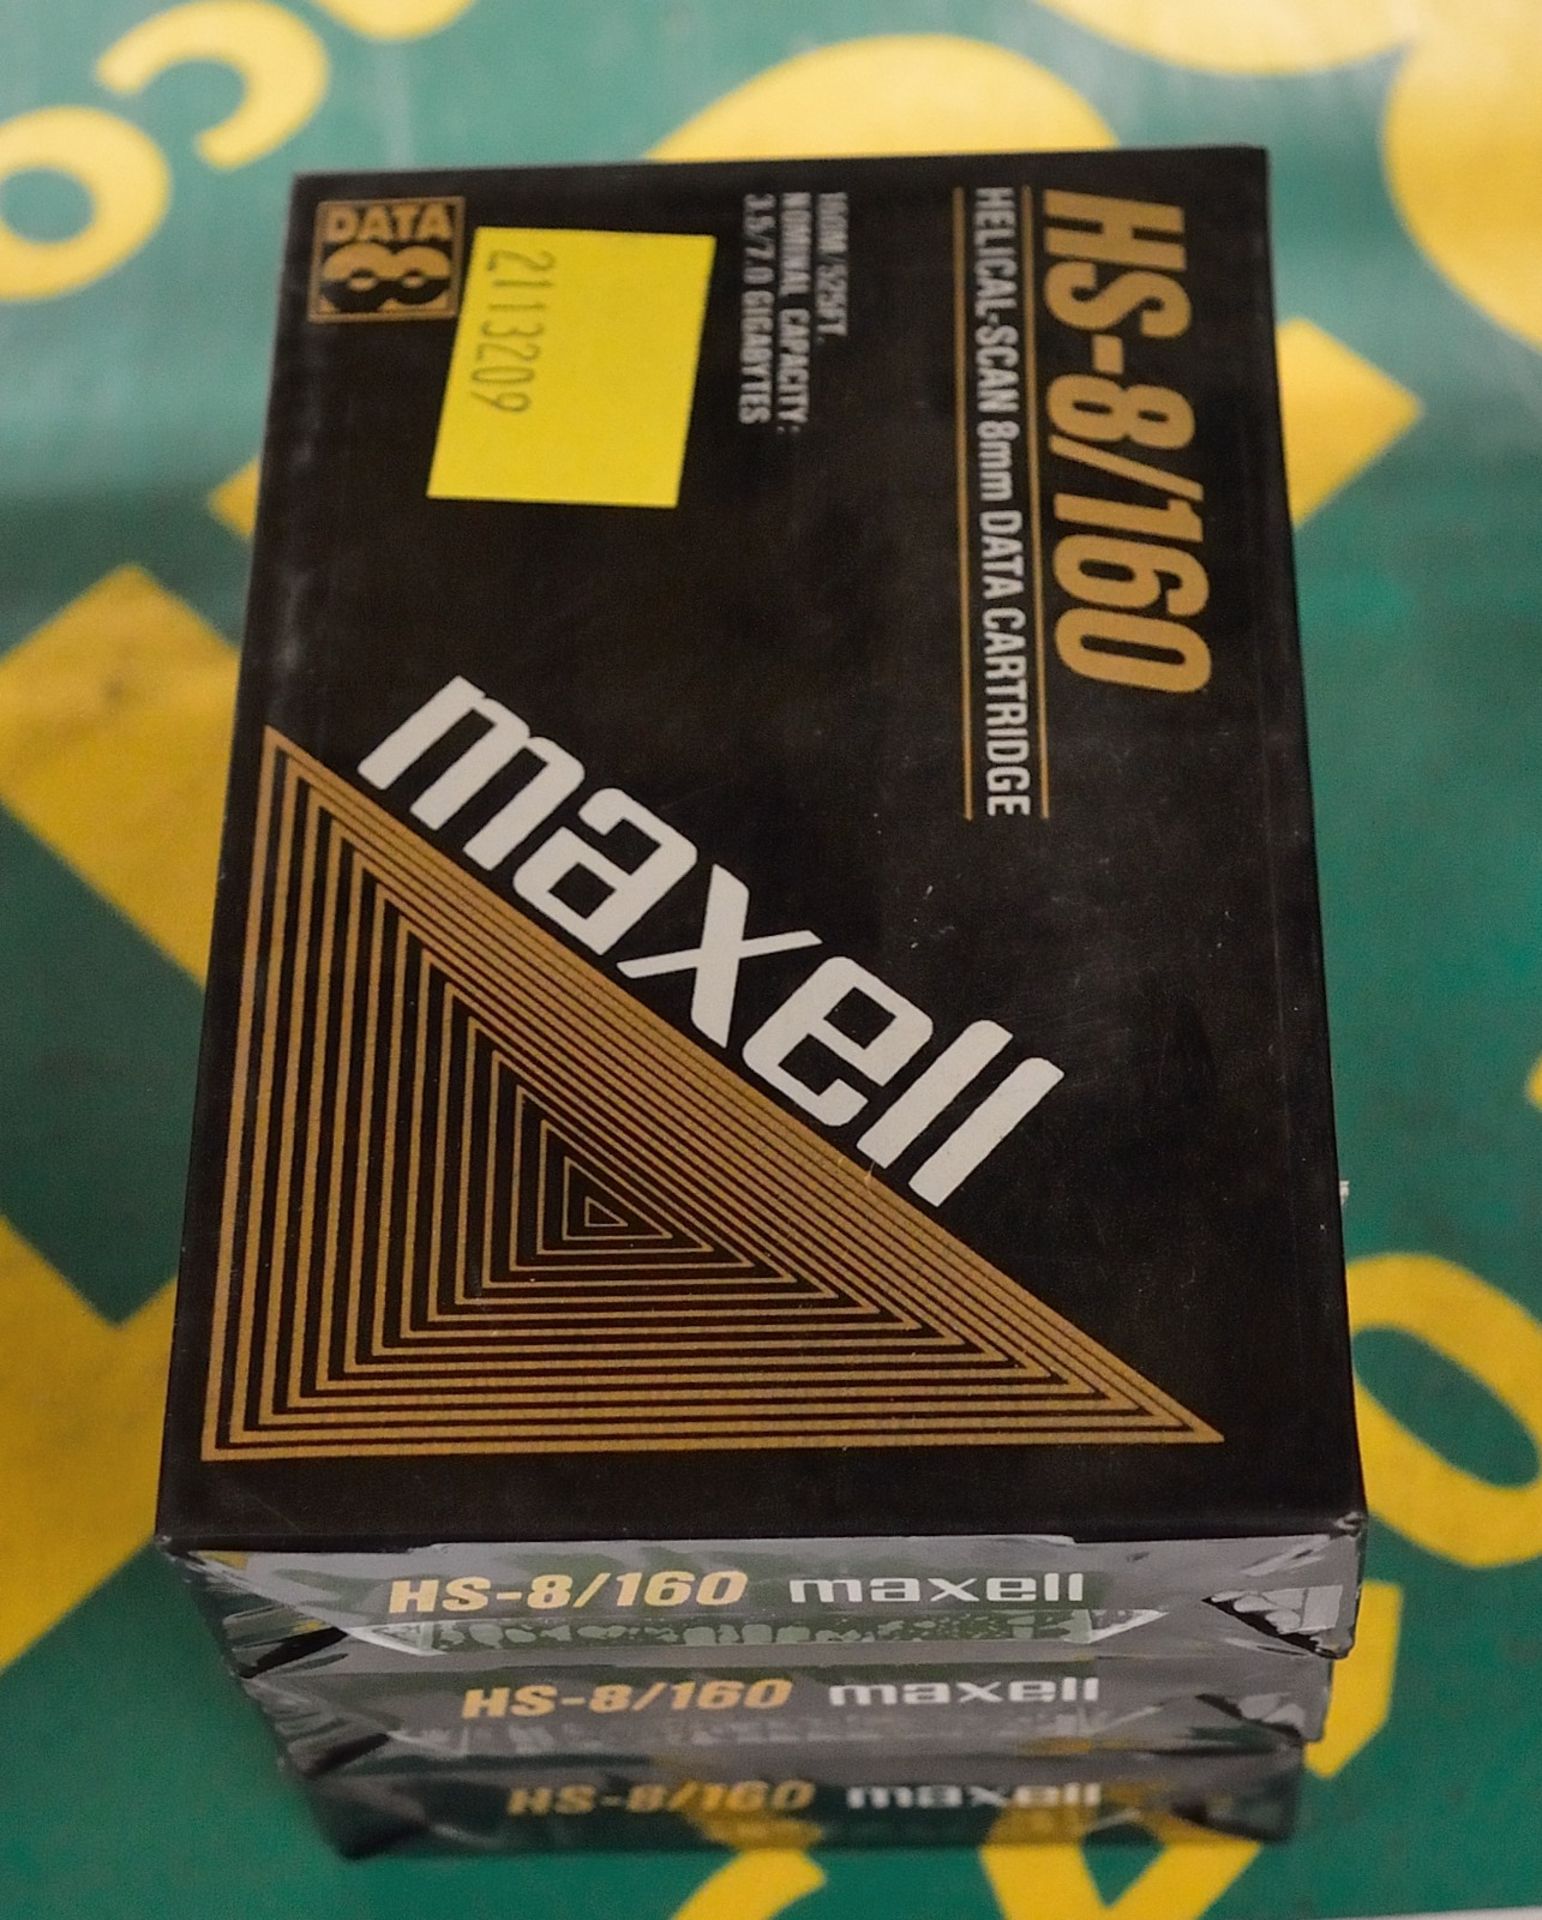 3x Maxell Data Cartridges HS-8/160 3.5/7.0GB.